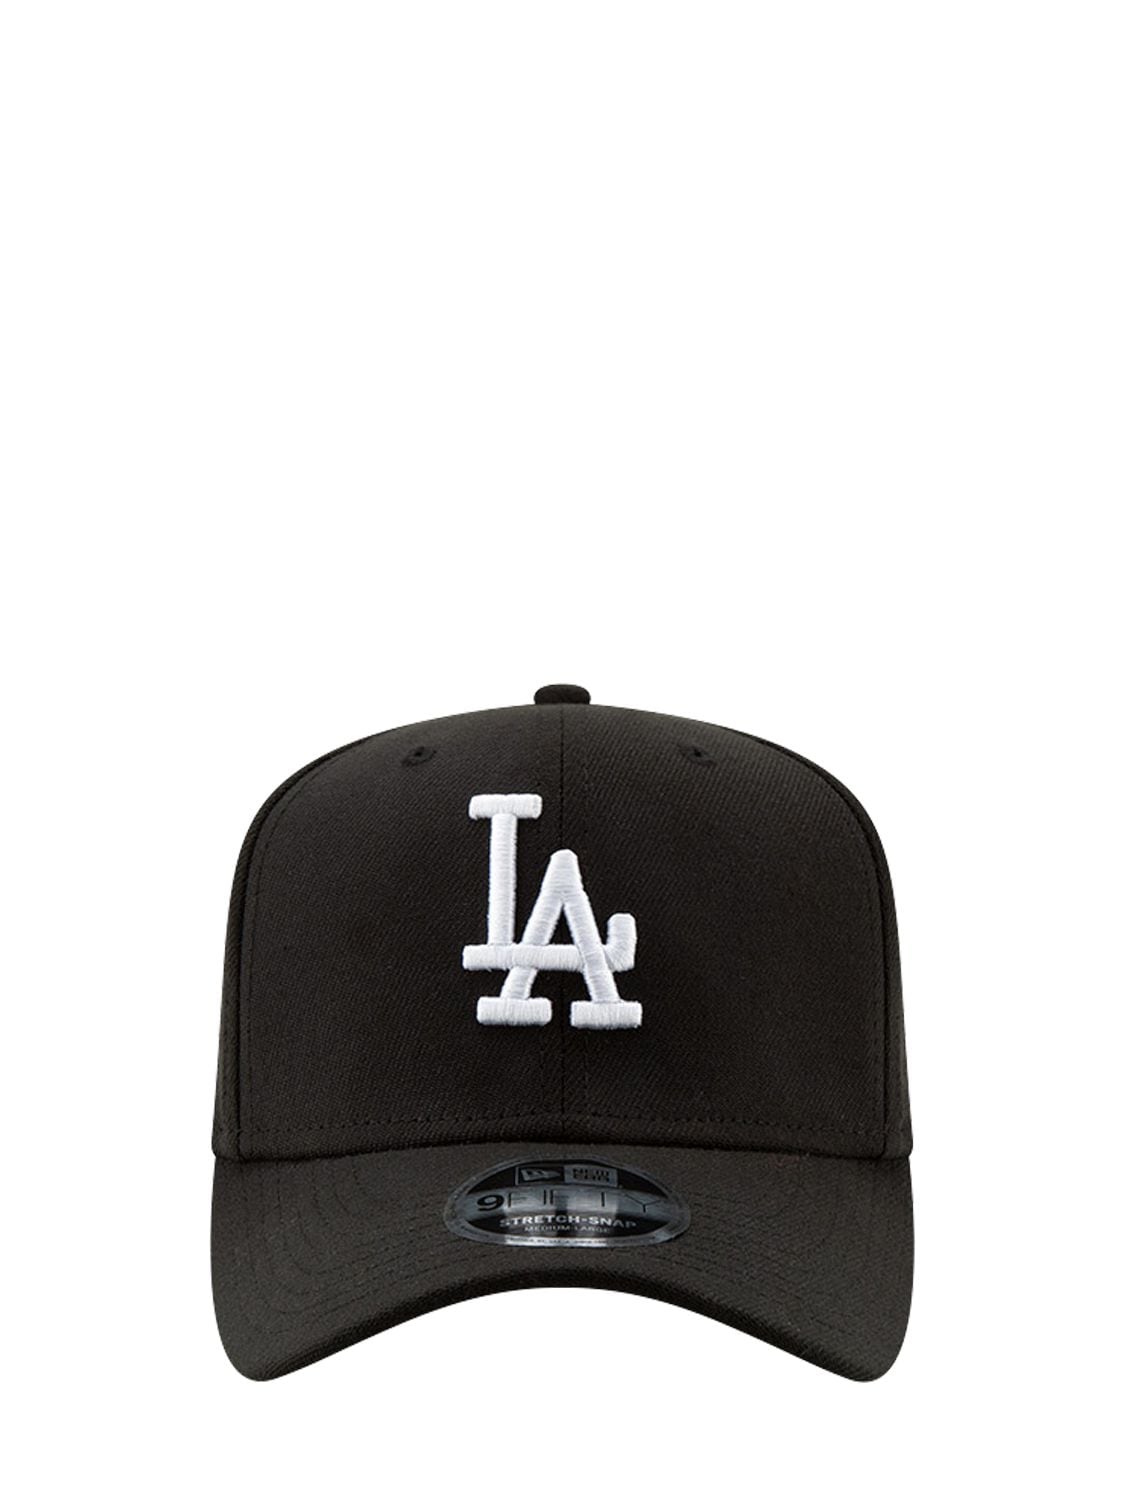 New Era 9fifty La Dodgers帽子 In Black